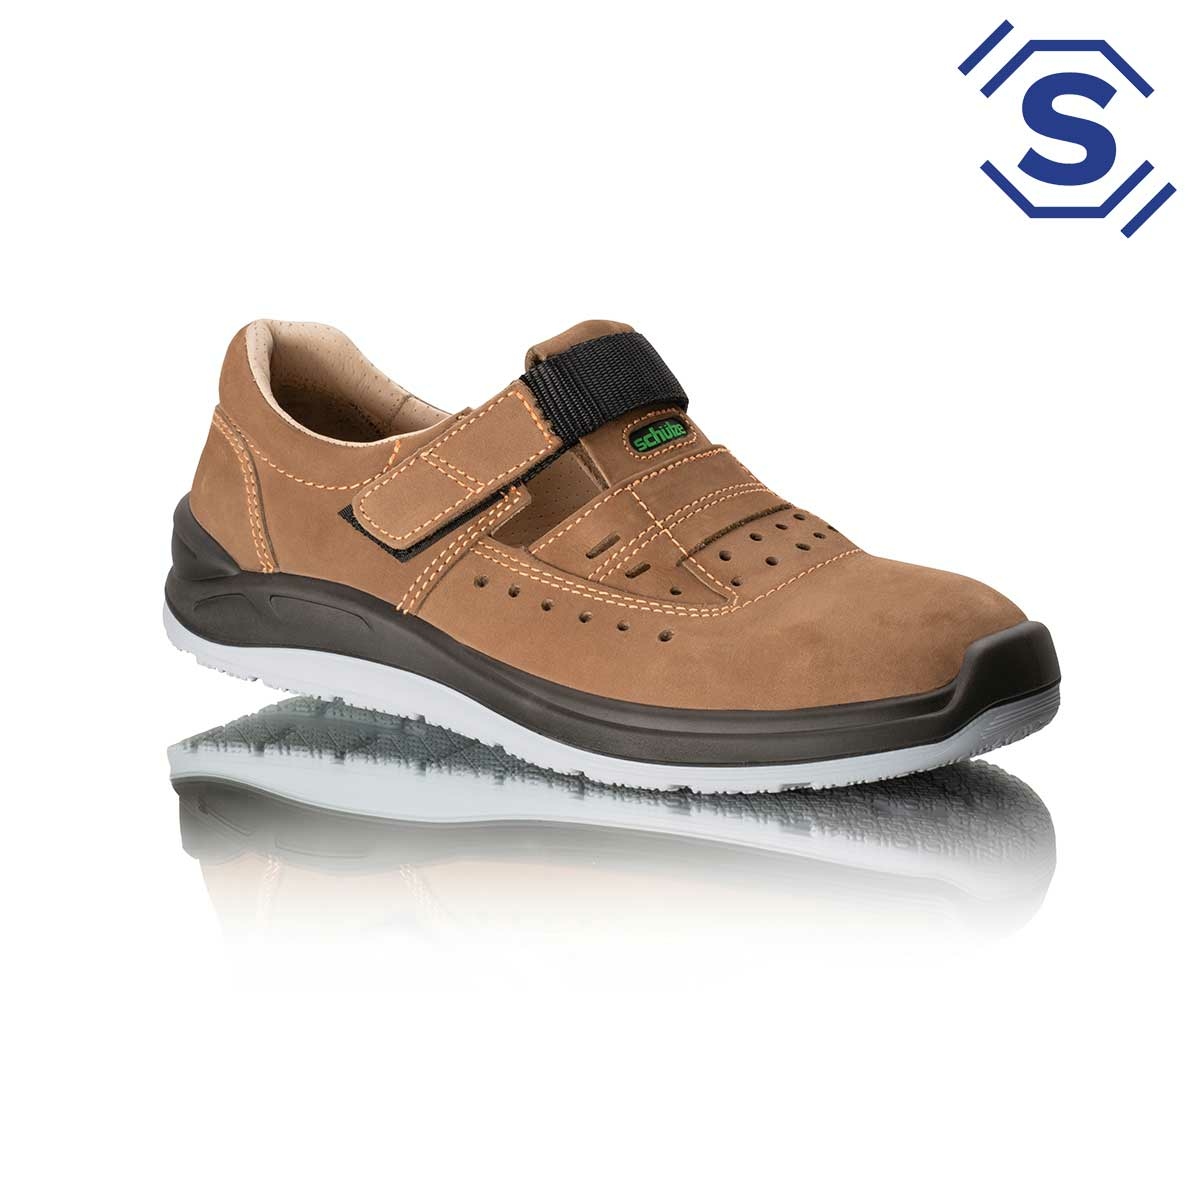 Sommer Sicherheits Sandalen leichte Arbeit S3 Schuhe Stahlkappen atmungsaktiv DE 